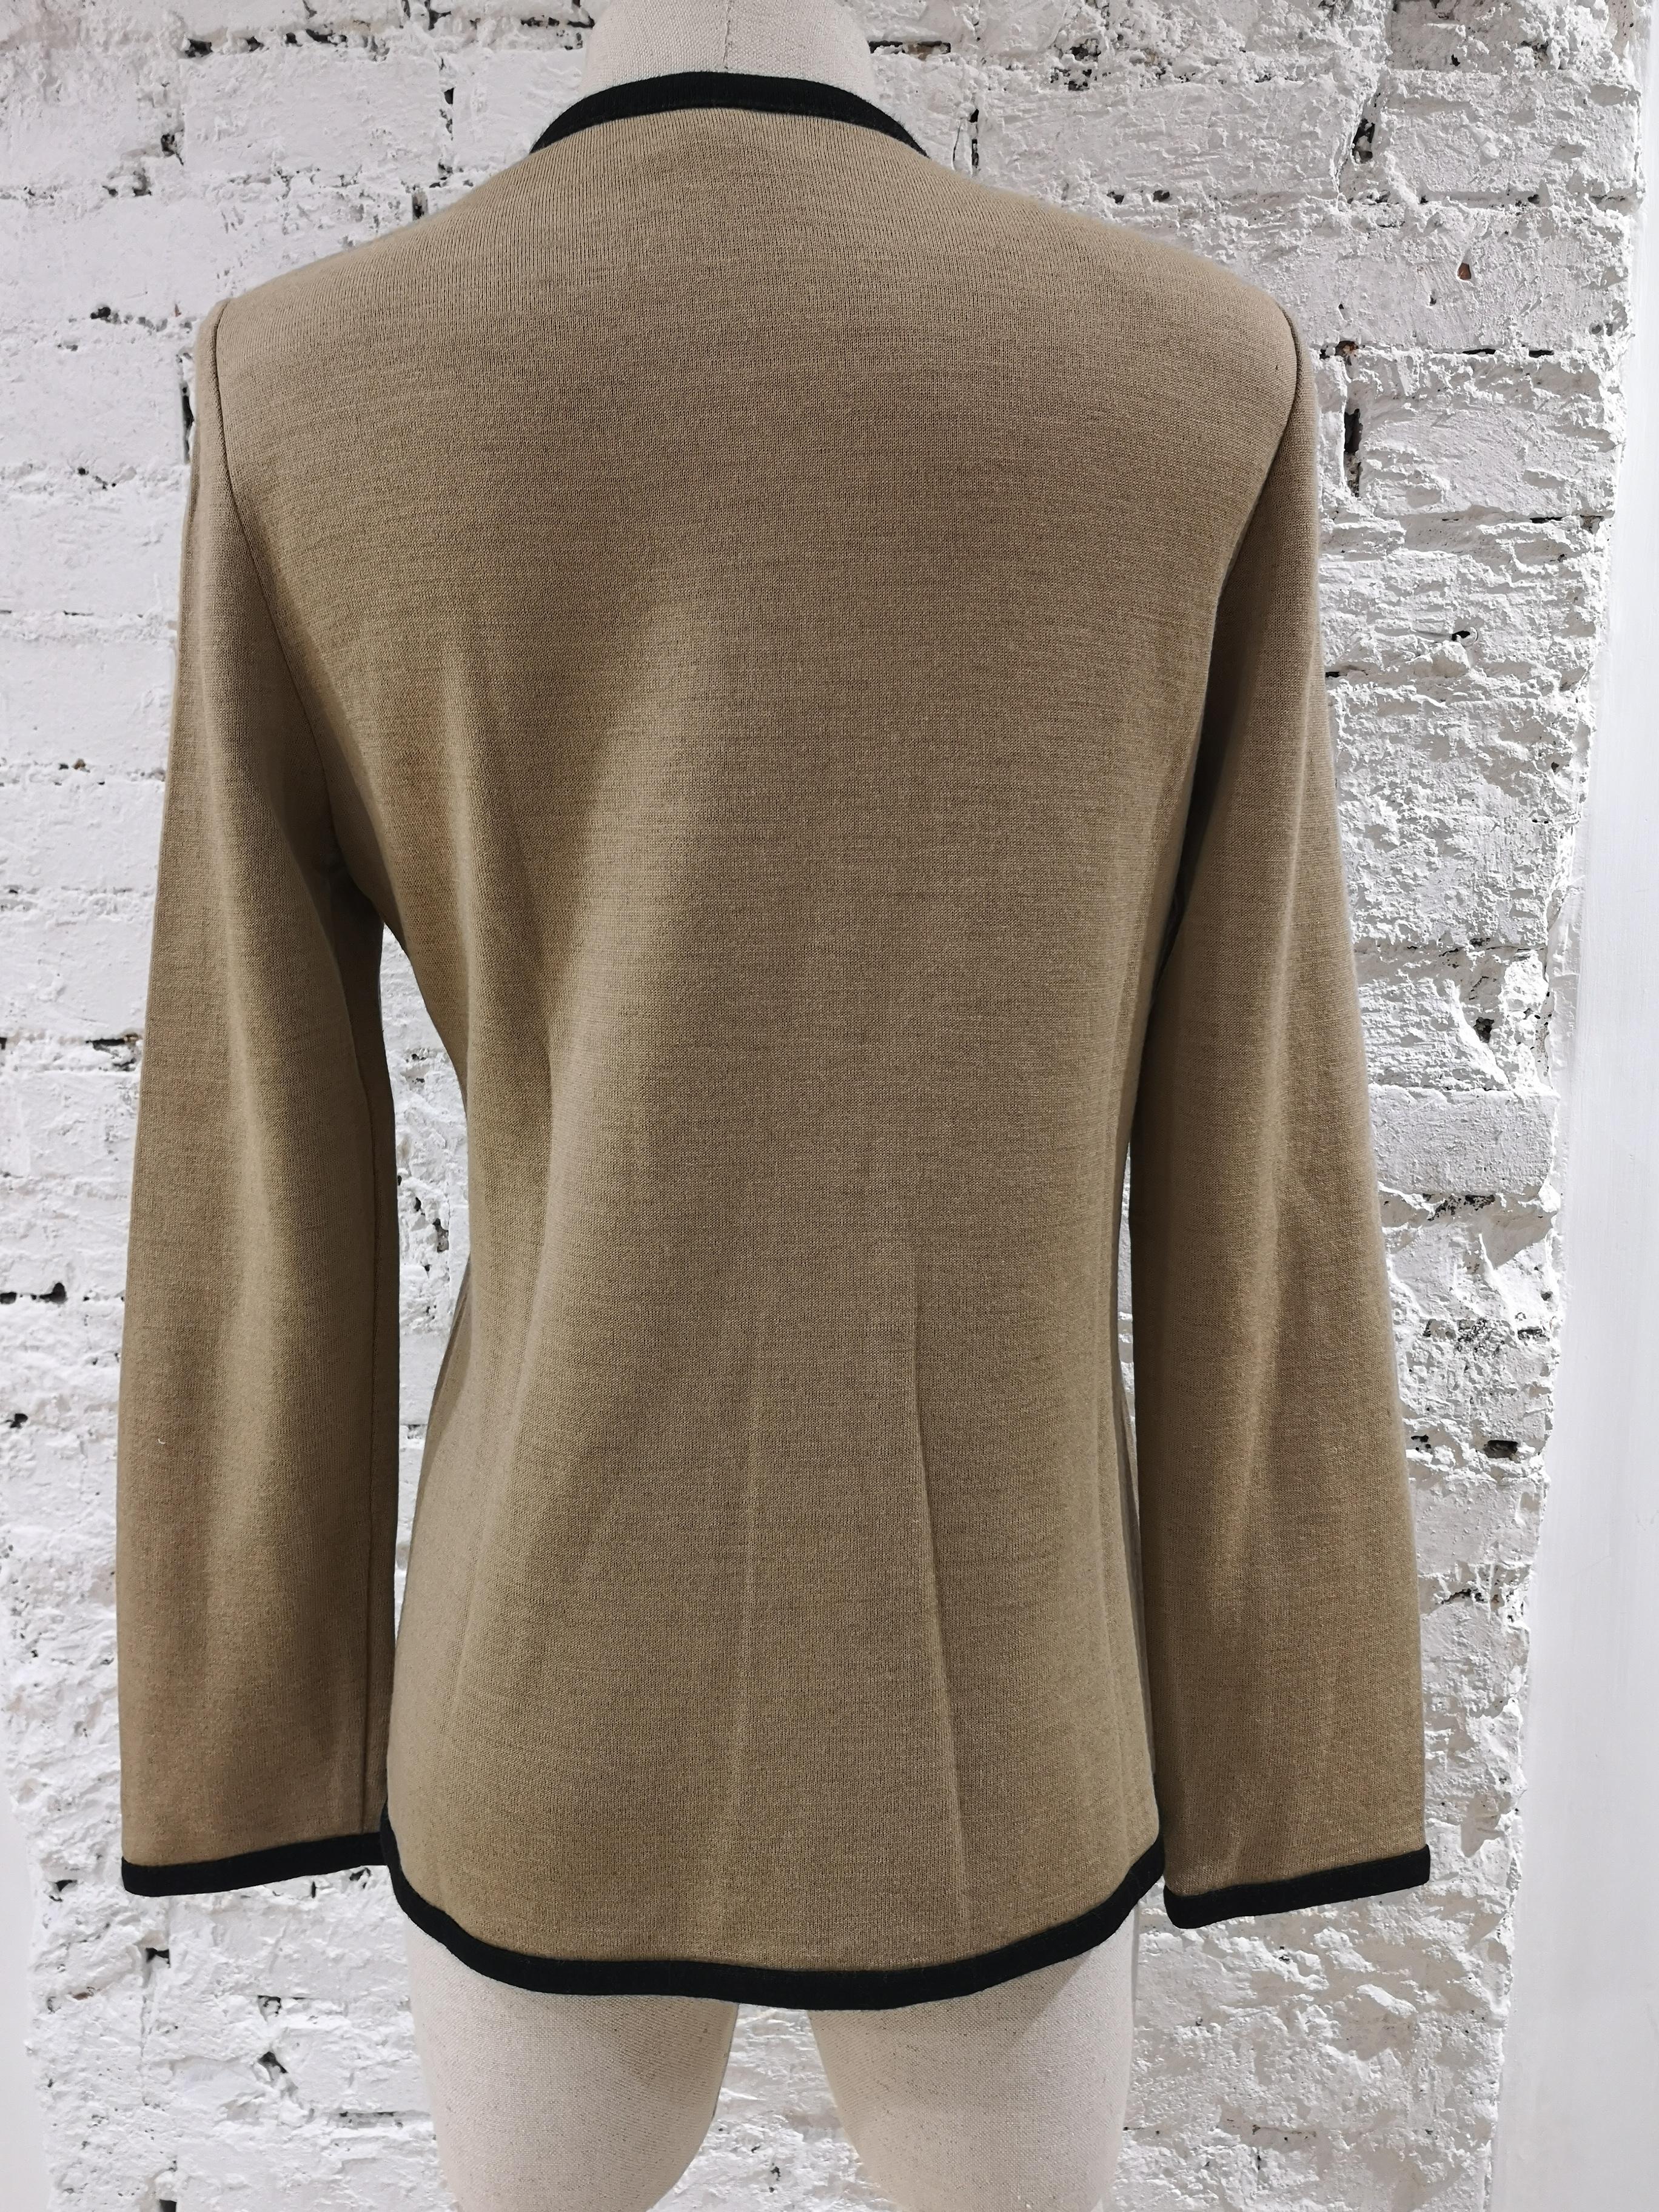 Pierre Carding beige black wool jacket / cardigan In Good Condition For Sale In Capri, IT